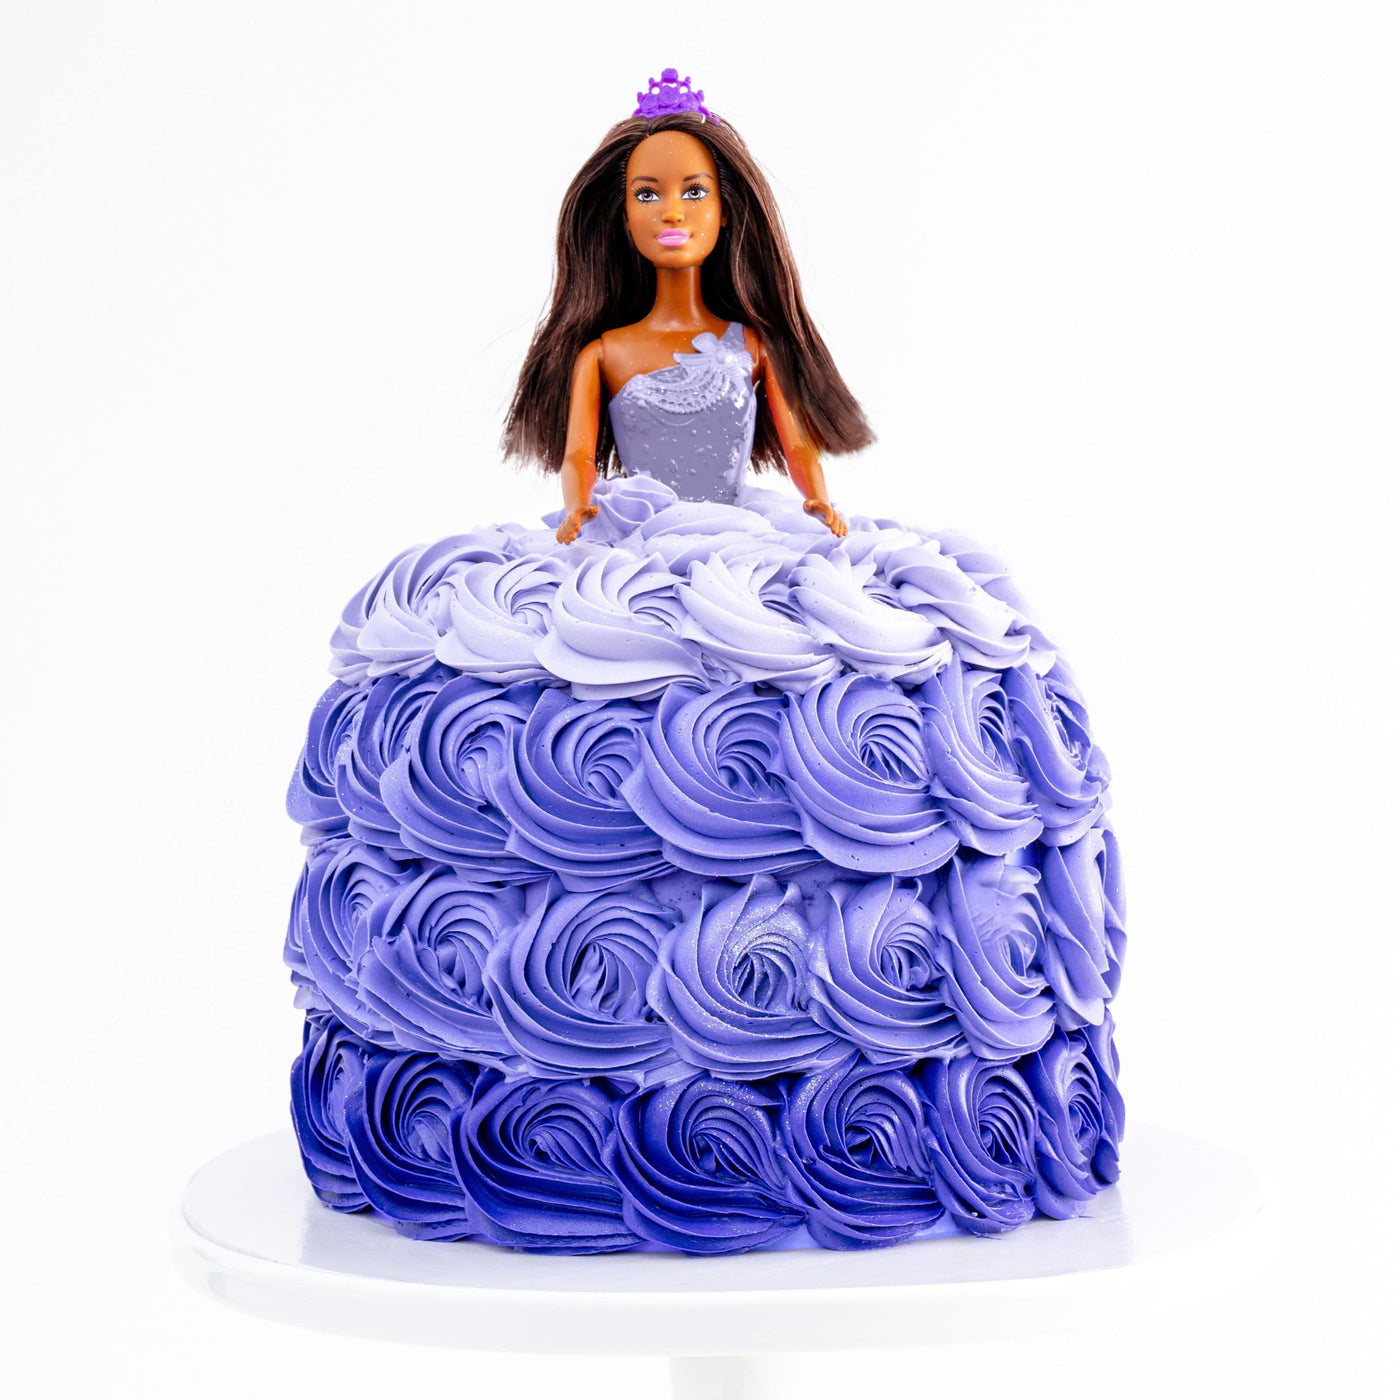 Barbie Doll Cake - Sweet E's Bake Shop